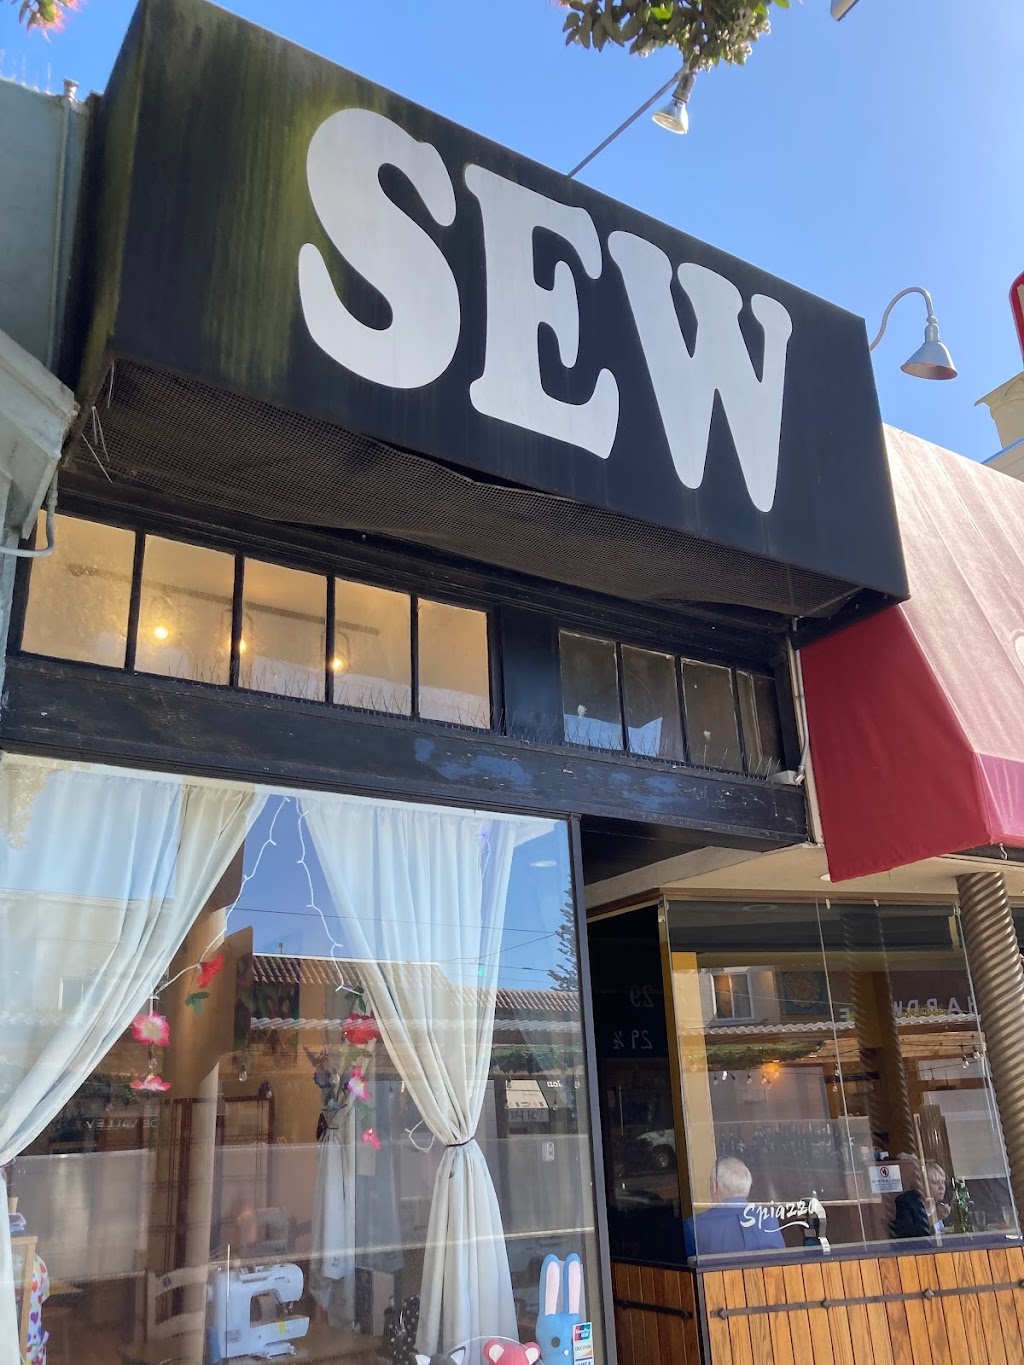 Walkershaw Clothing / Sew | 29 W Portal Ave, San Francisco, CA 94127 | Phone: (415) 920-1956